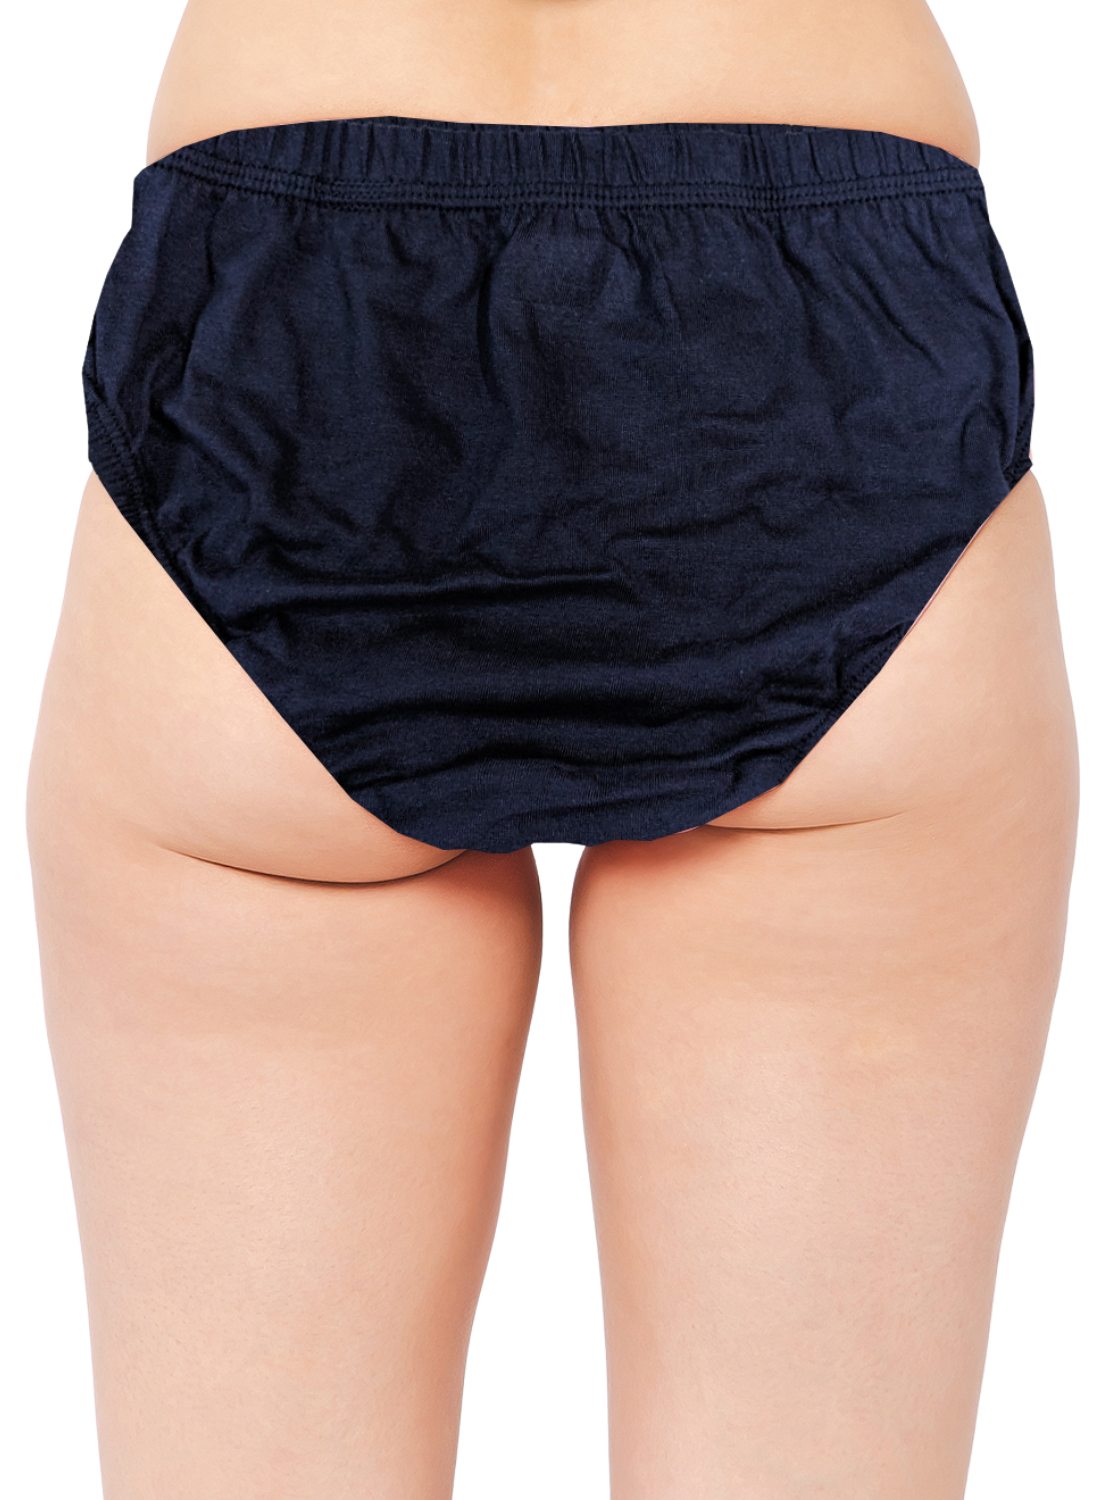 AUSM Premium Cotton Panty - Superior Quality | Comfort Elastic Type | Beautiful Plain Panties